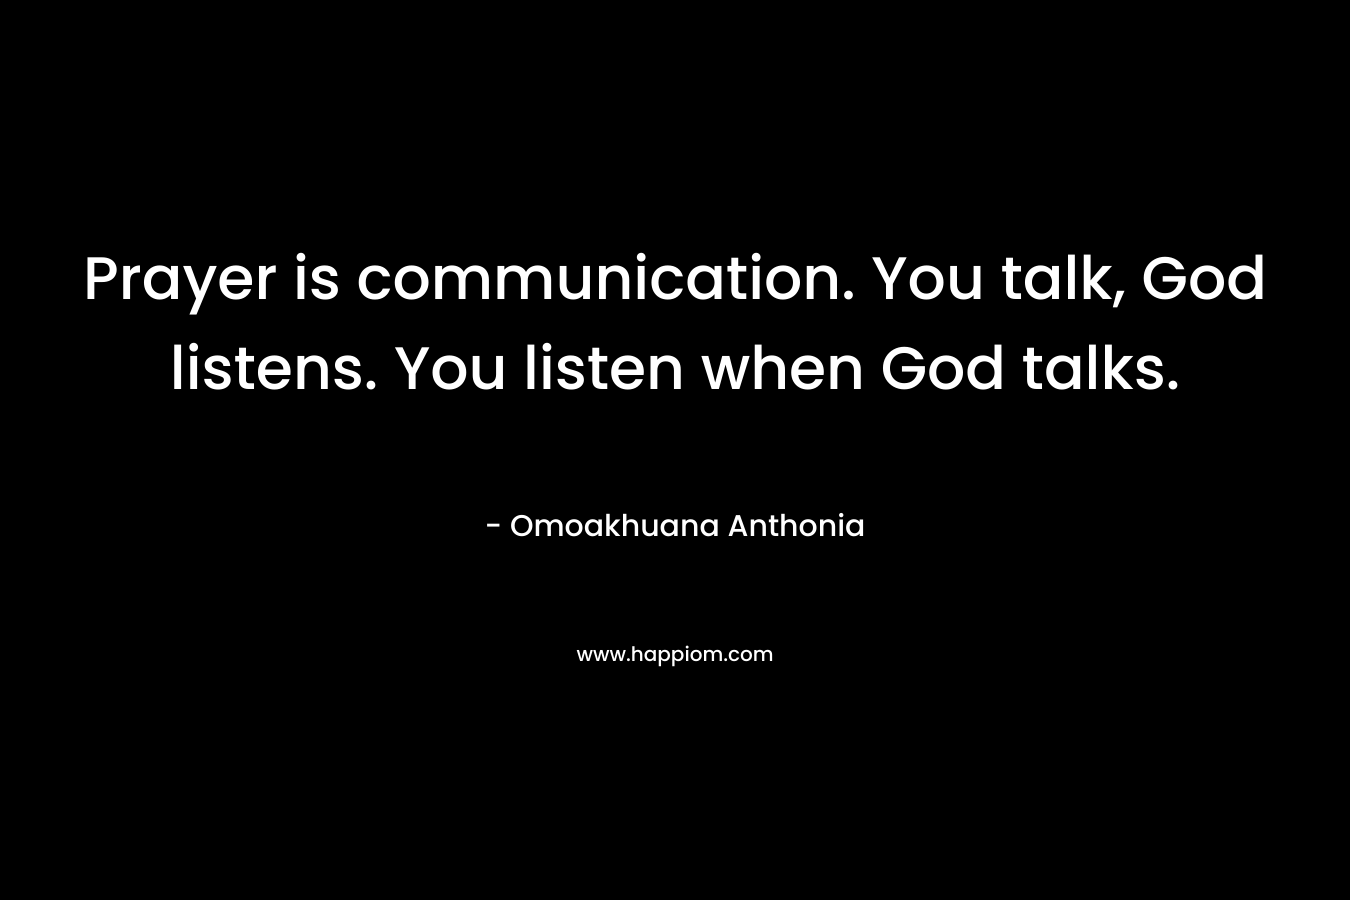 Prayer is communication. You talk, God listens. You listen when God talks.